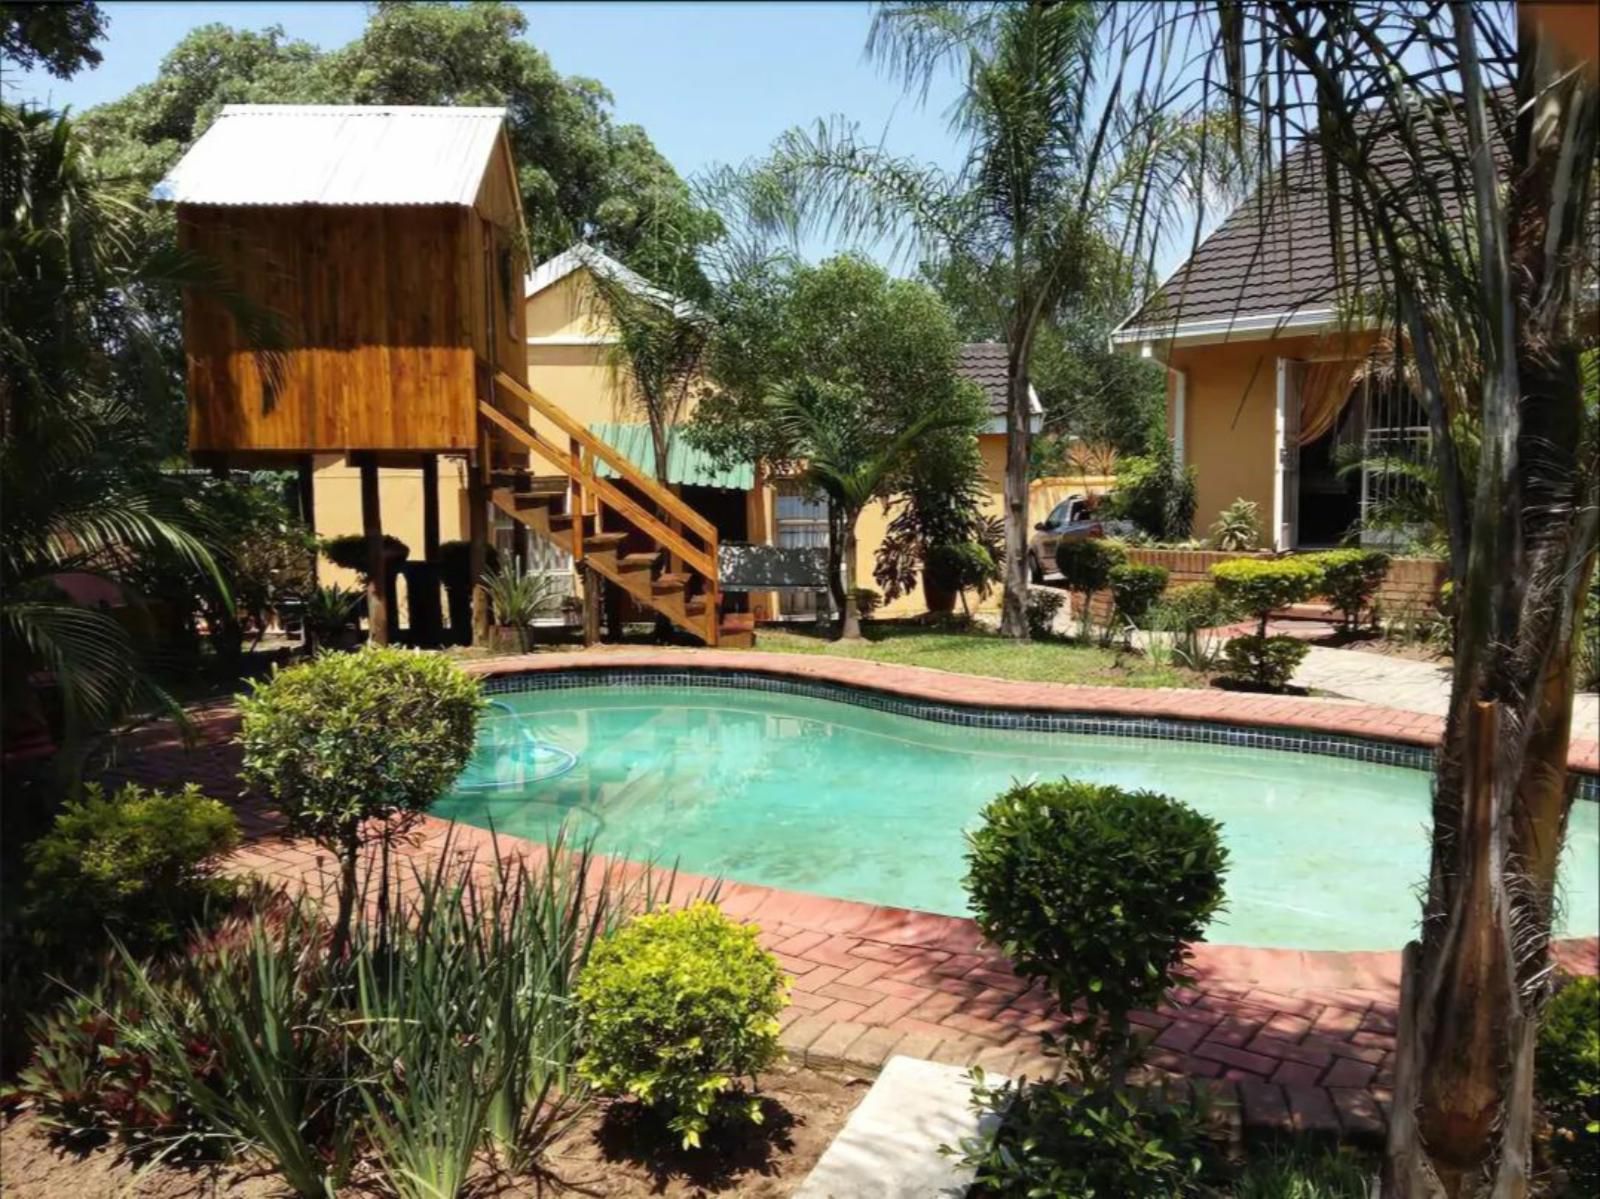 Ekhaya Nelspruit Guest House West Acres Nelspruit Mpumalanga South Africa House, Building, Architecture, Garden, Nature, Plant, Swimming Pool